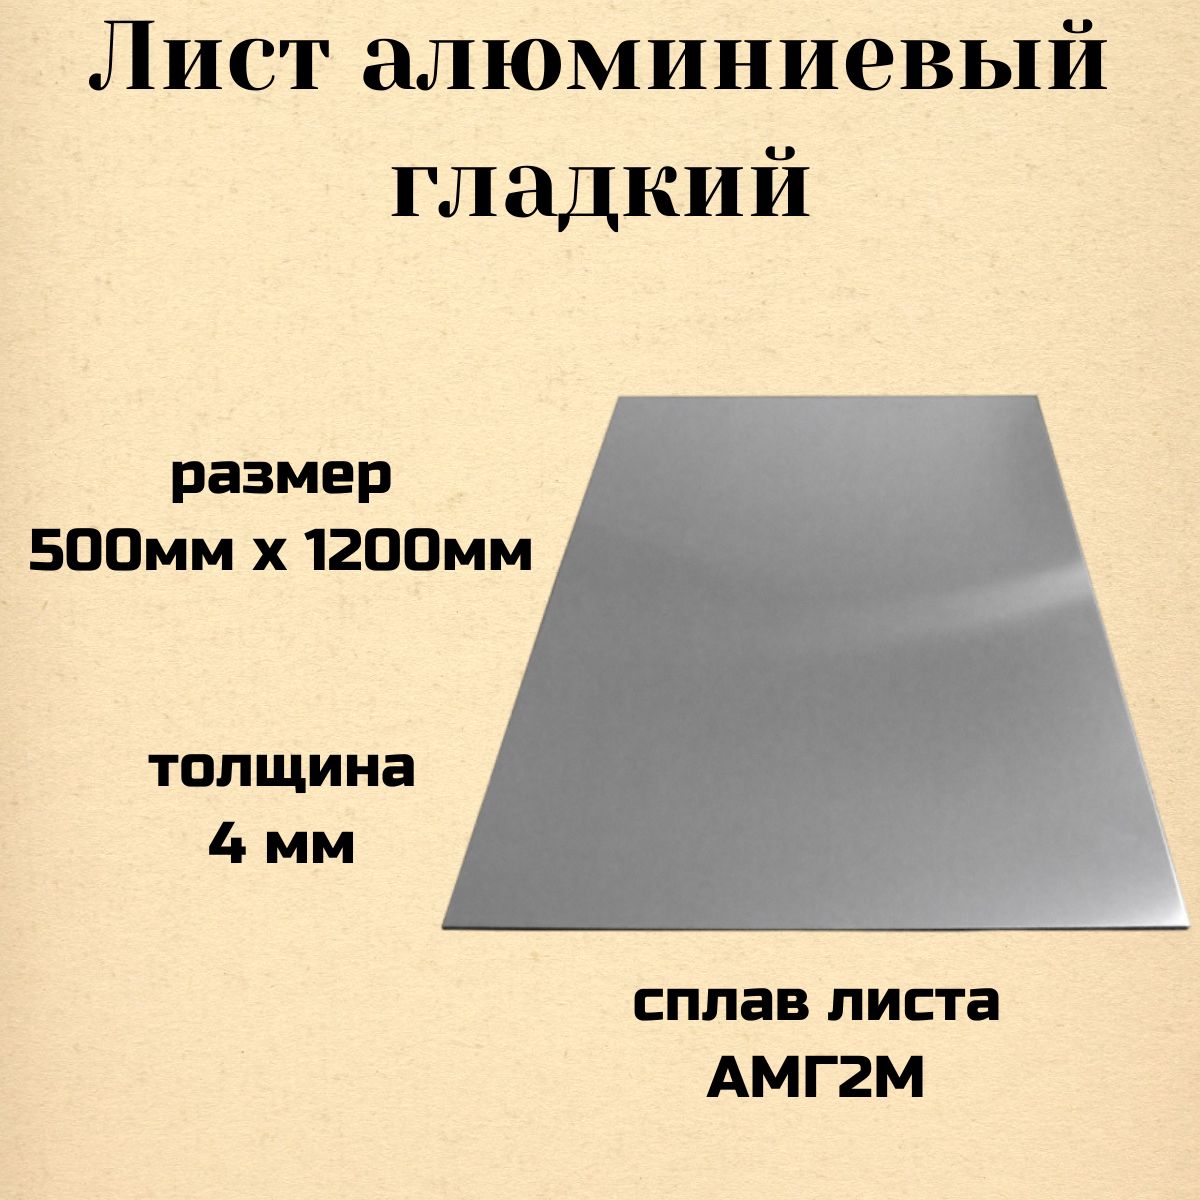 Листалюминиевыйгладкий4мм(500х1200мм)АМГ2М